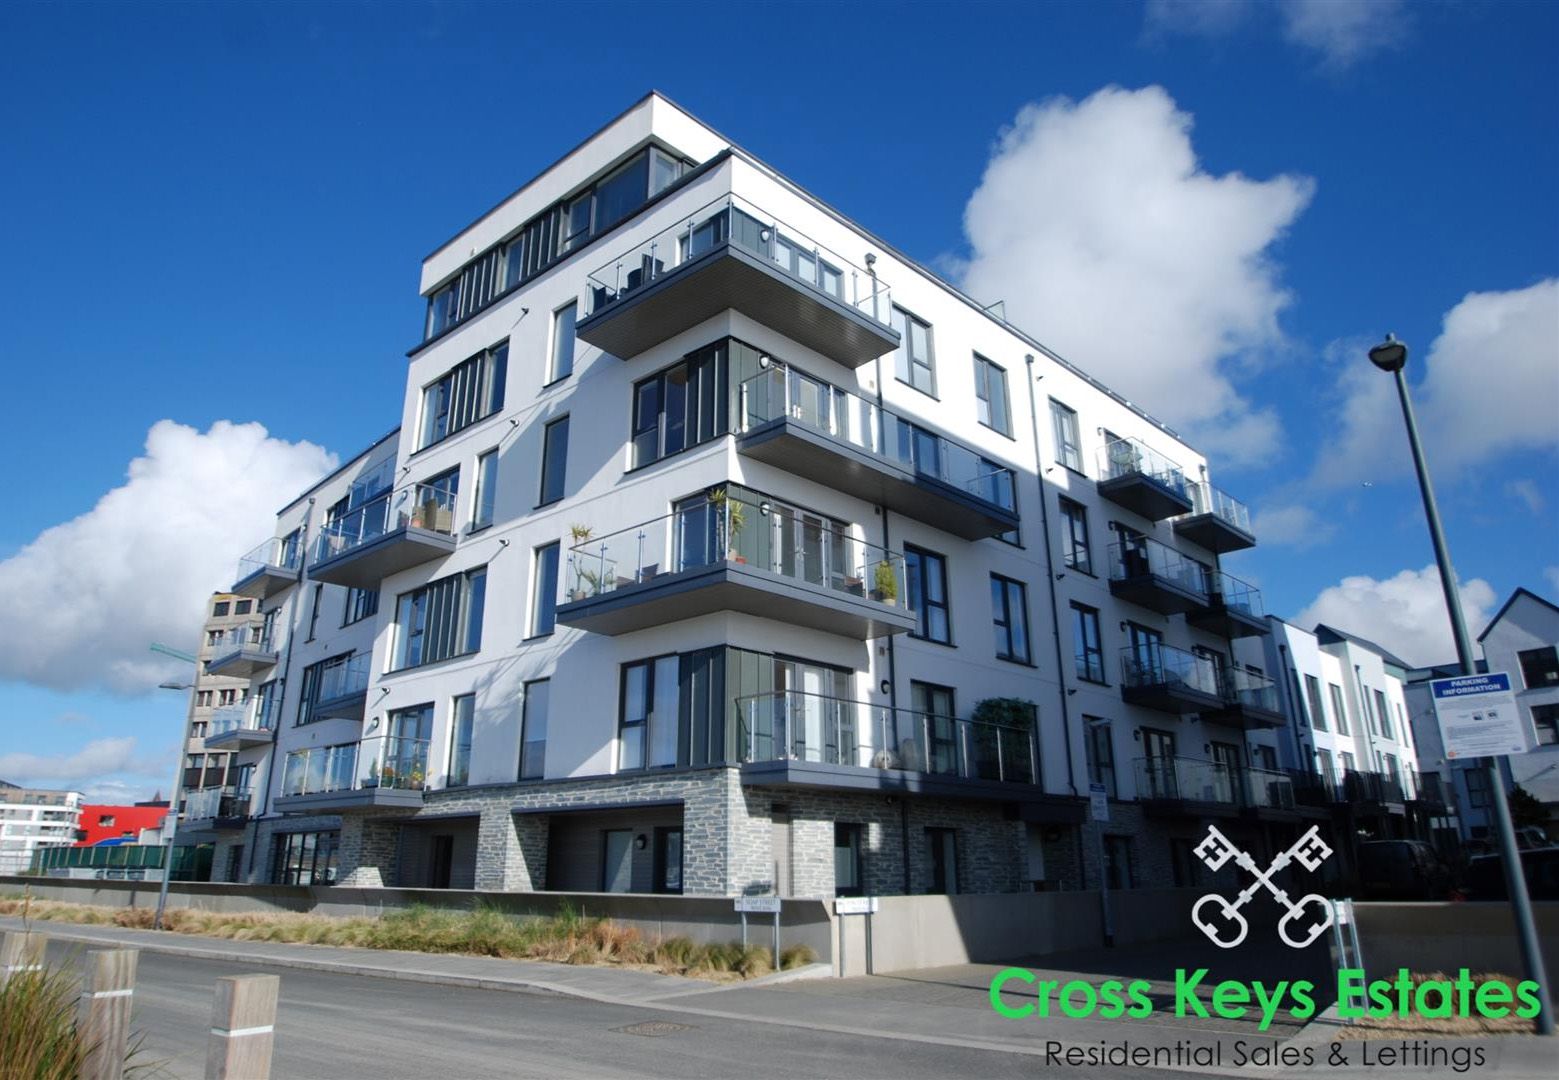 Cross Keys Estate Agents Sales Property of the Week 2